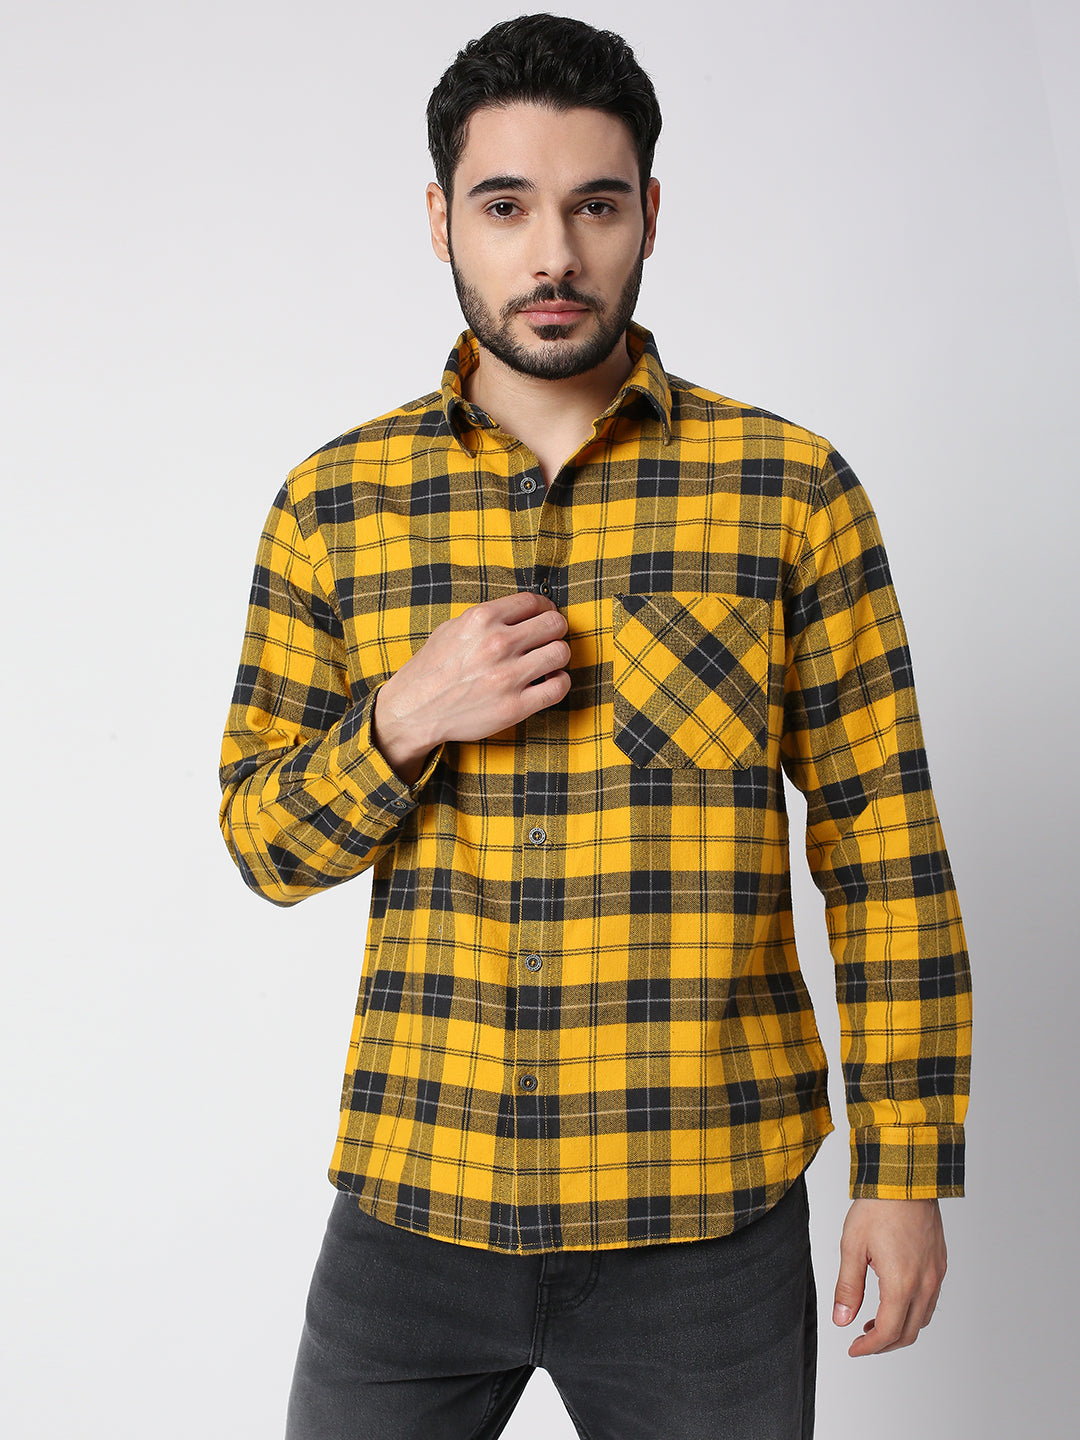 Buy Blamblack Checkered Yellow and Navy Blue plaid shirt.